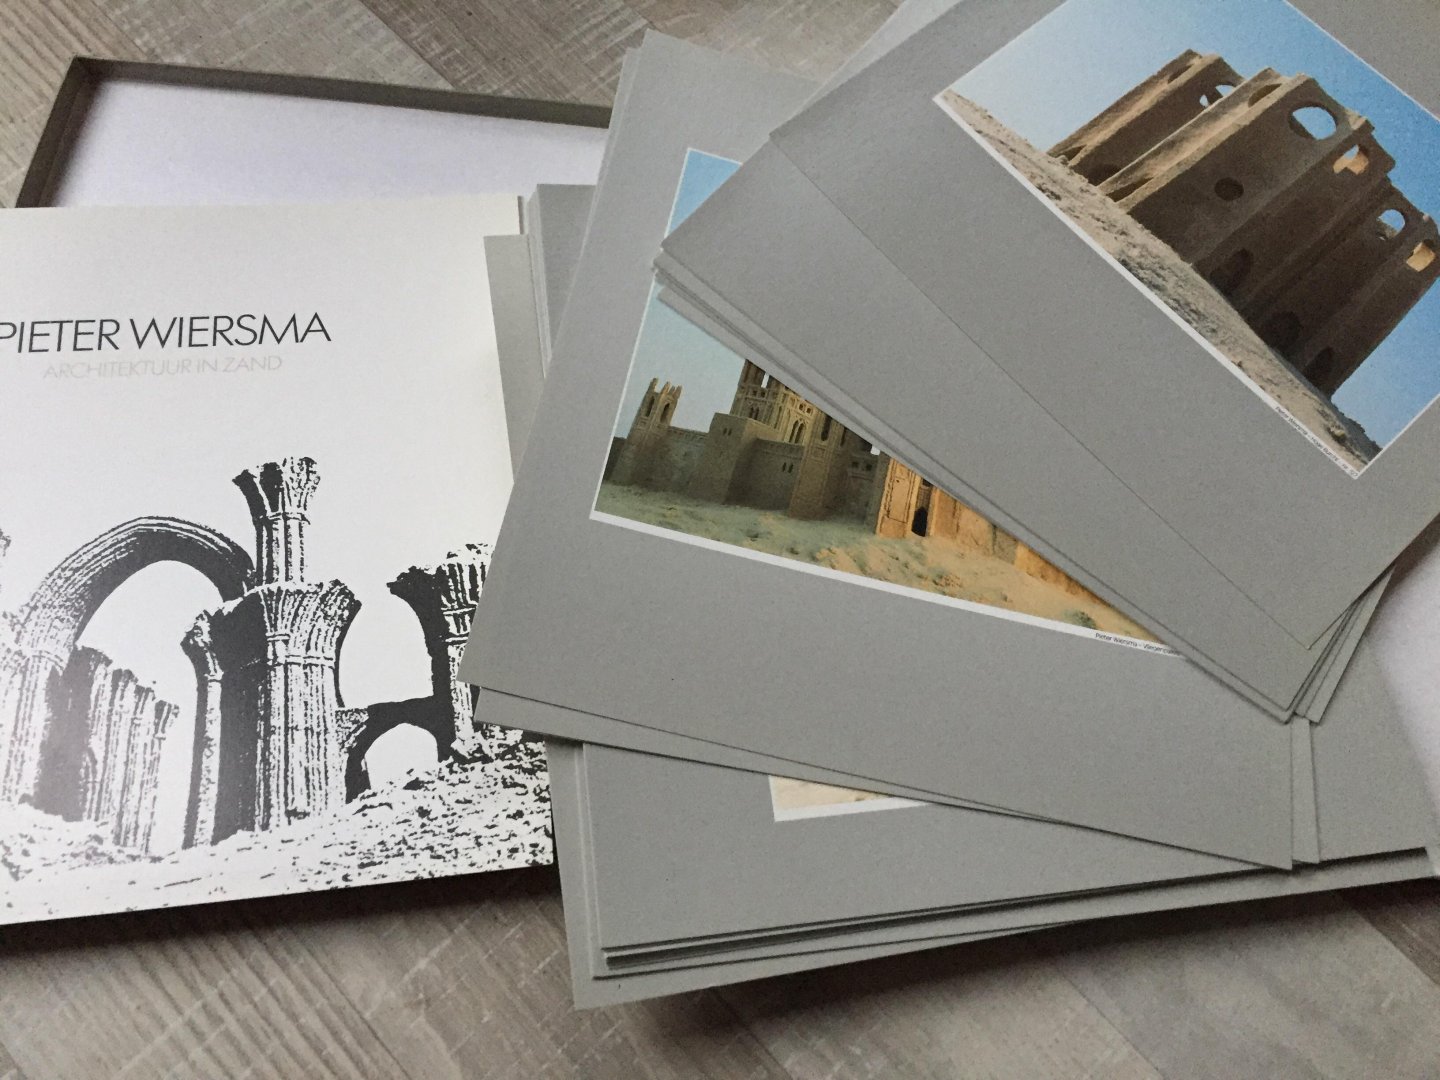 Wiersma - Architectuur in zand m. 25 fotos doos / druk 1